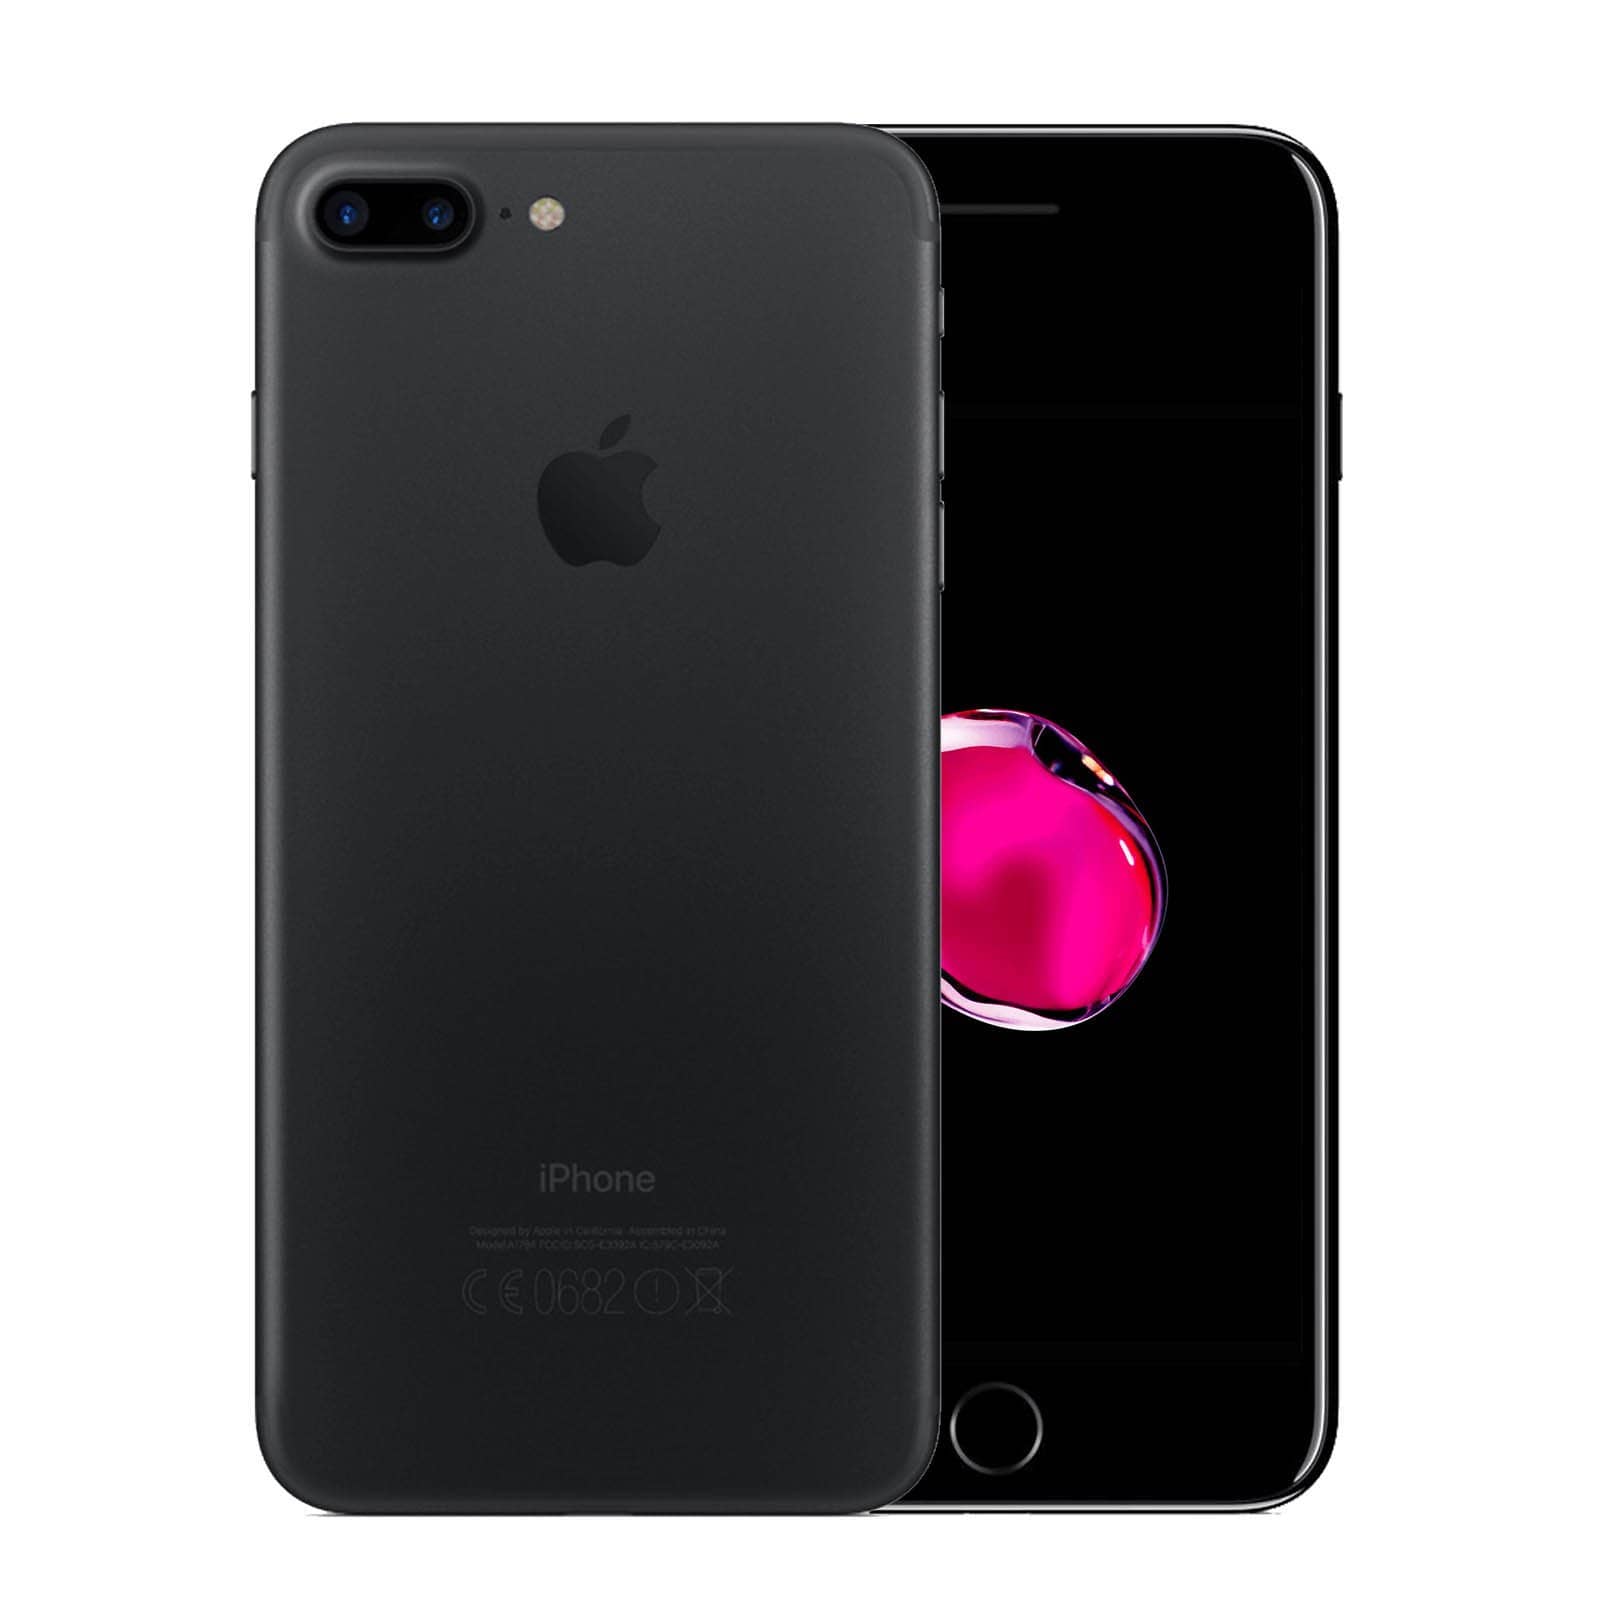 Apple iPhone 7 Plus 32GB Black Fair - Unlocked 32GB Black Fair